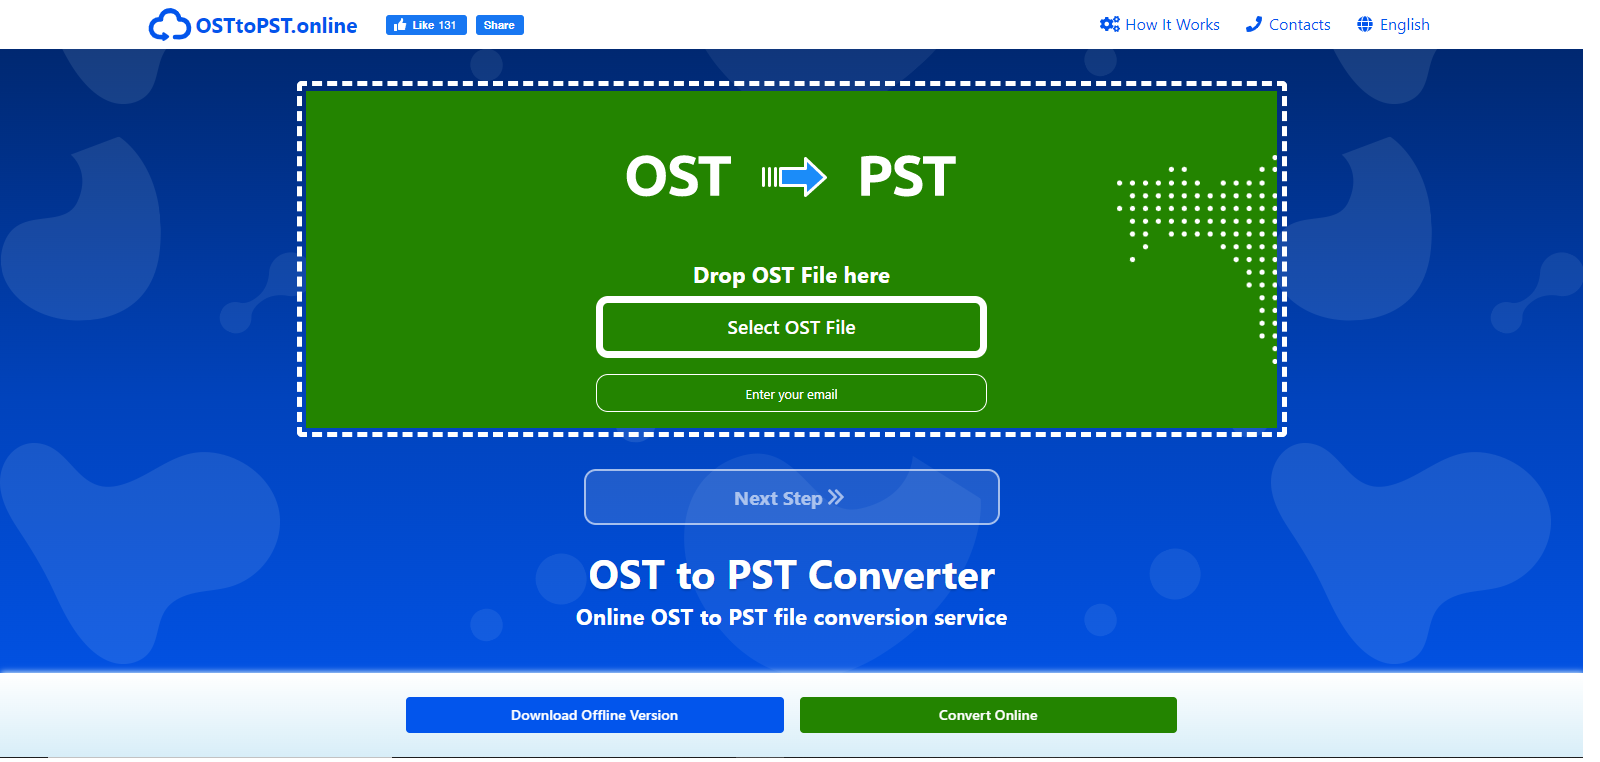 ost2pst-online